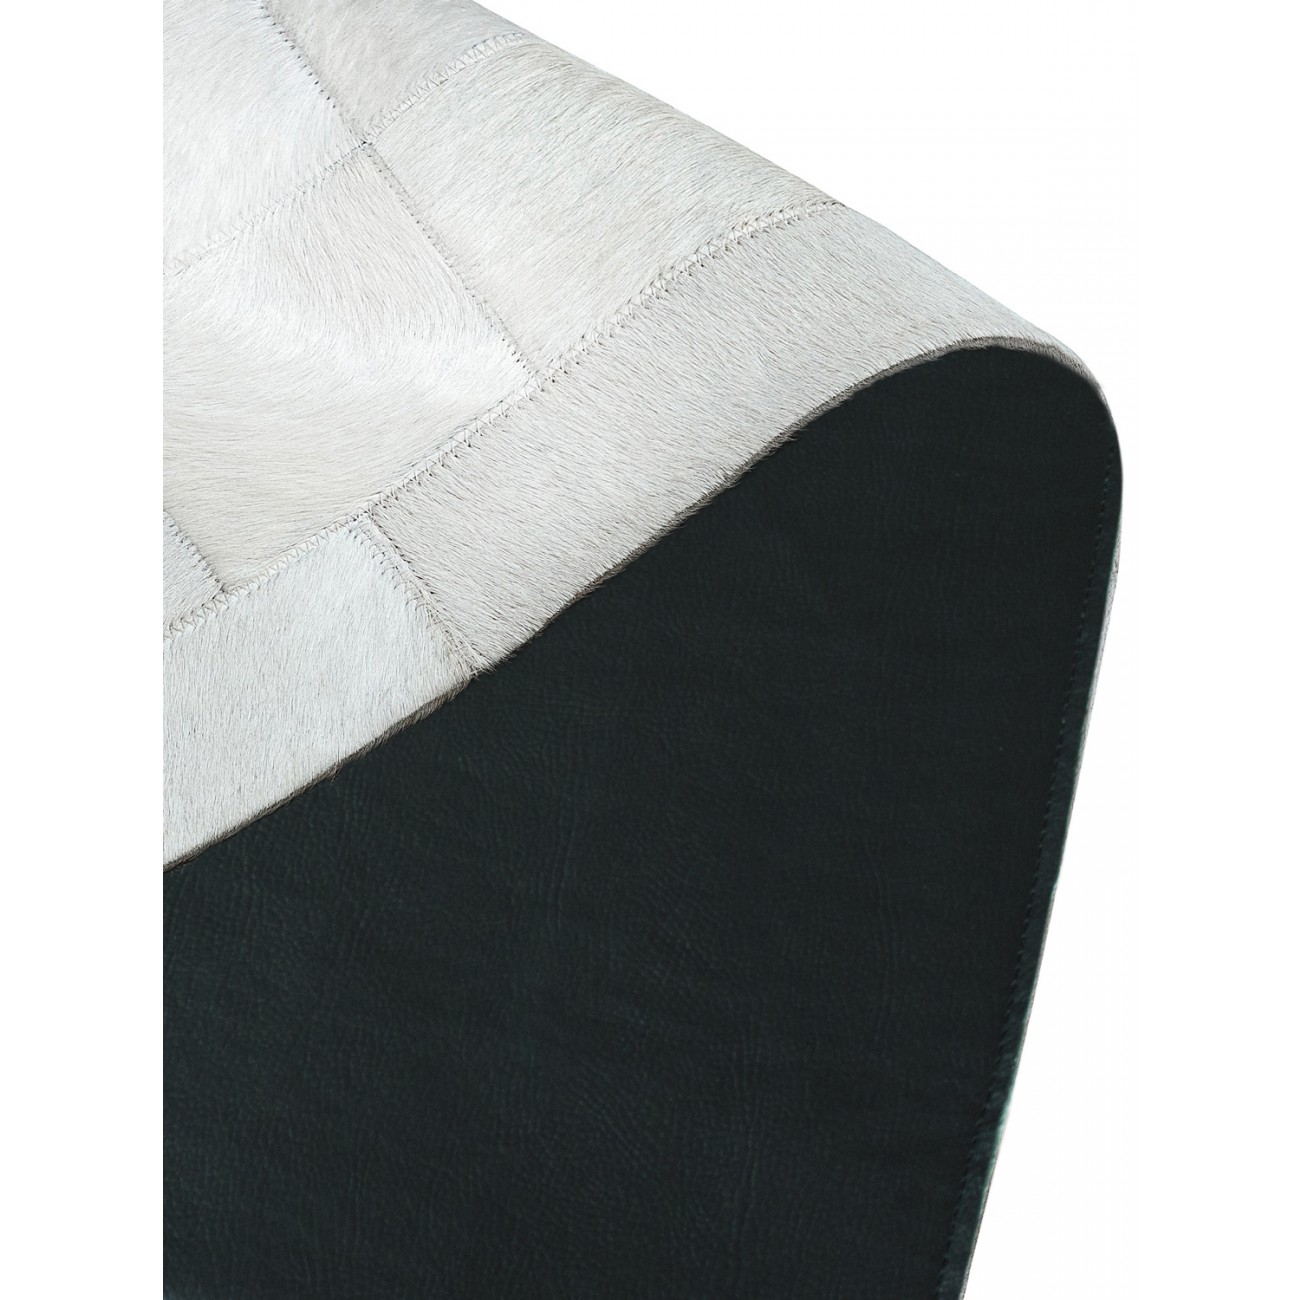 Tapete Couro Branco com Borda (10x10) - Personalizável